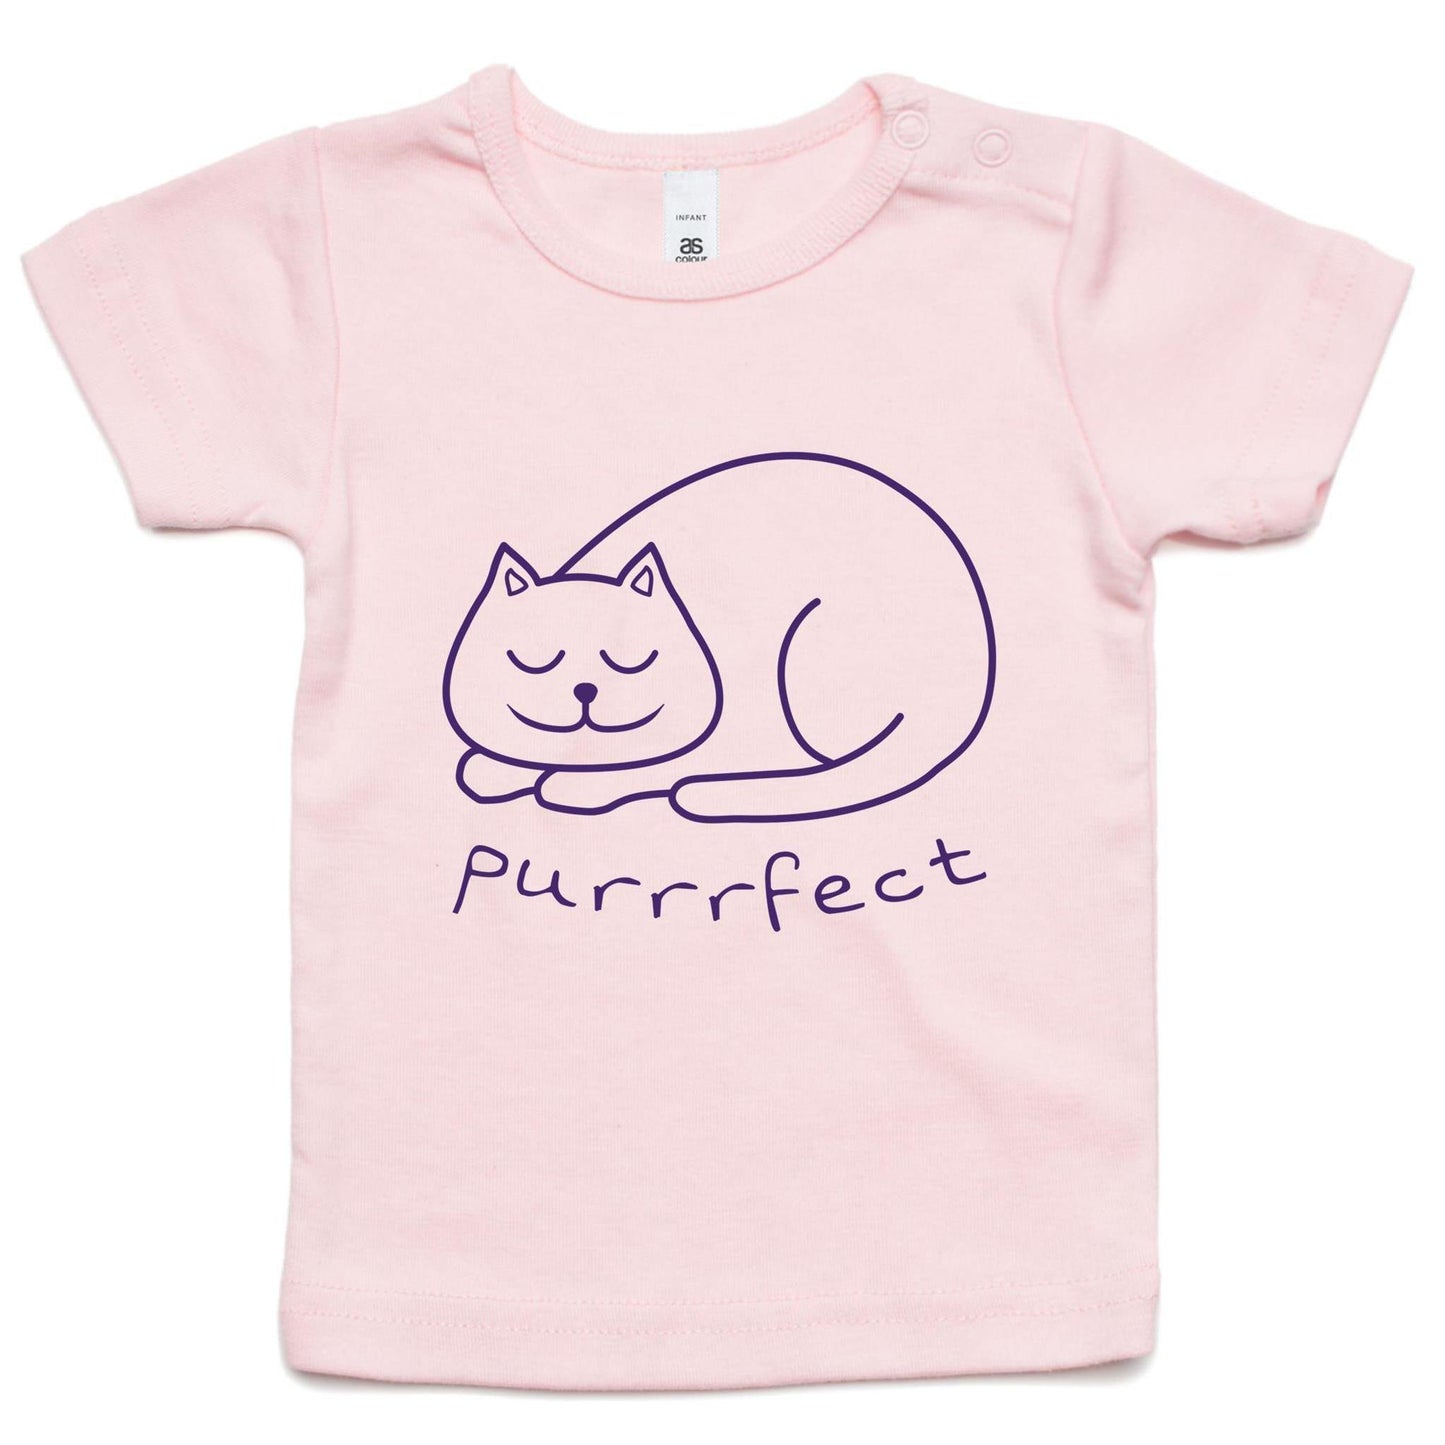 Purrrfect - Baby T-shirt Pink Baby T-shirt animal kids